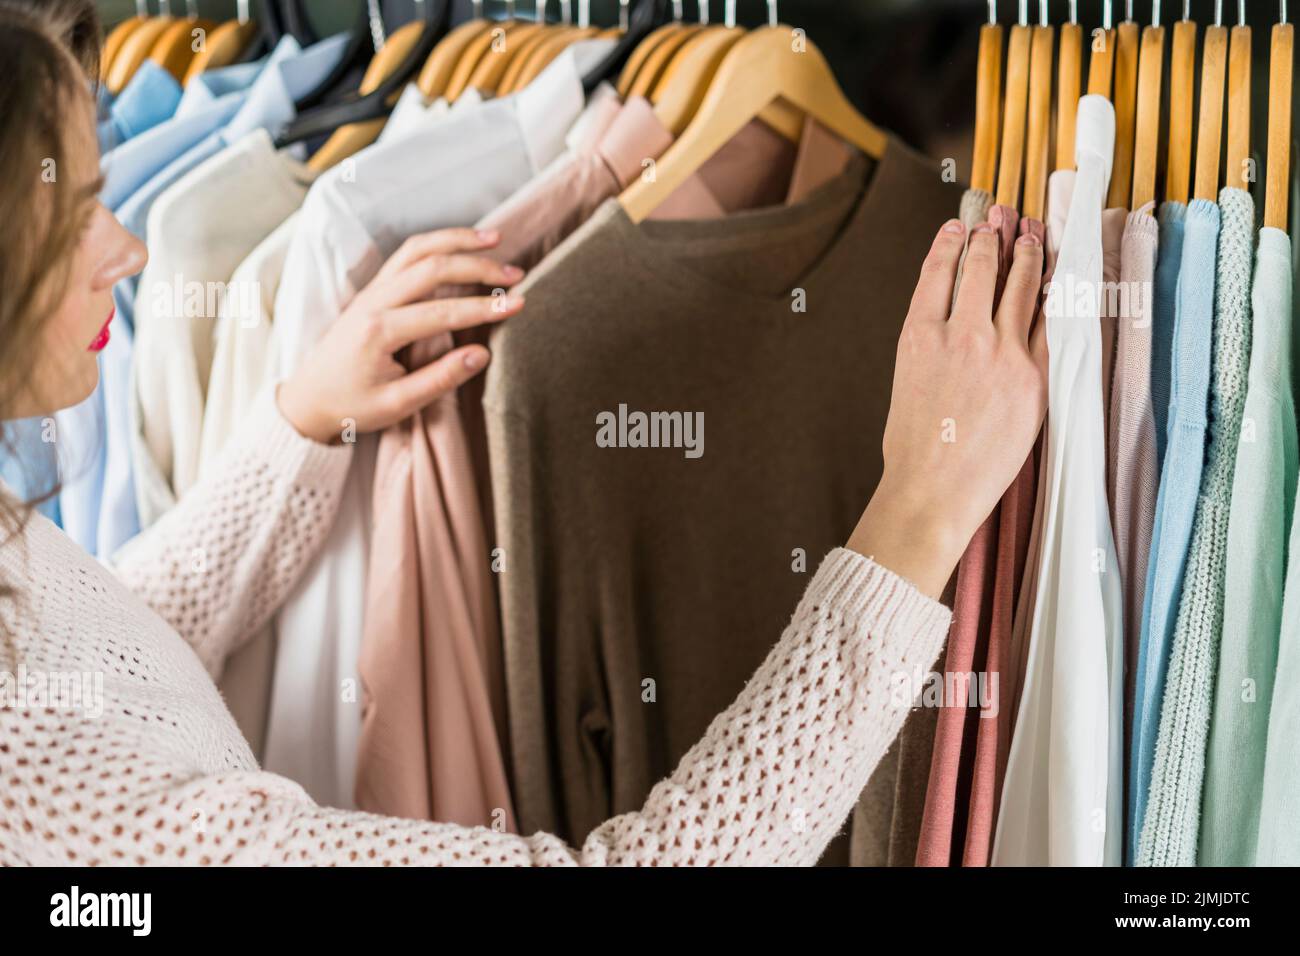 Woman choosing dress during shopping garments apparel Stock Photo